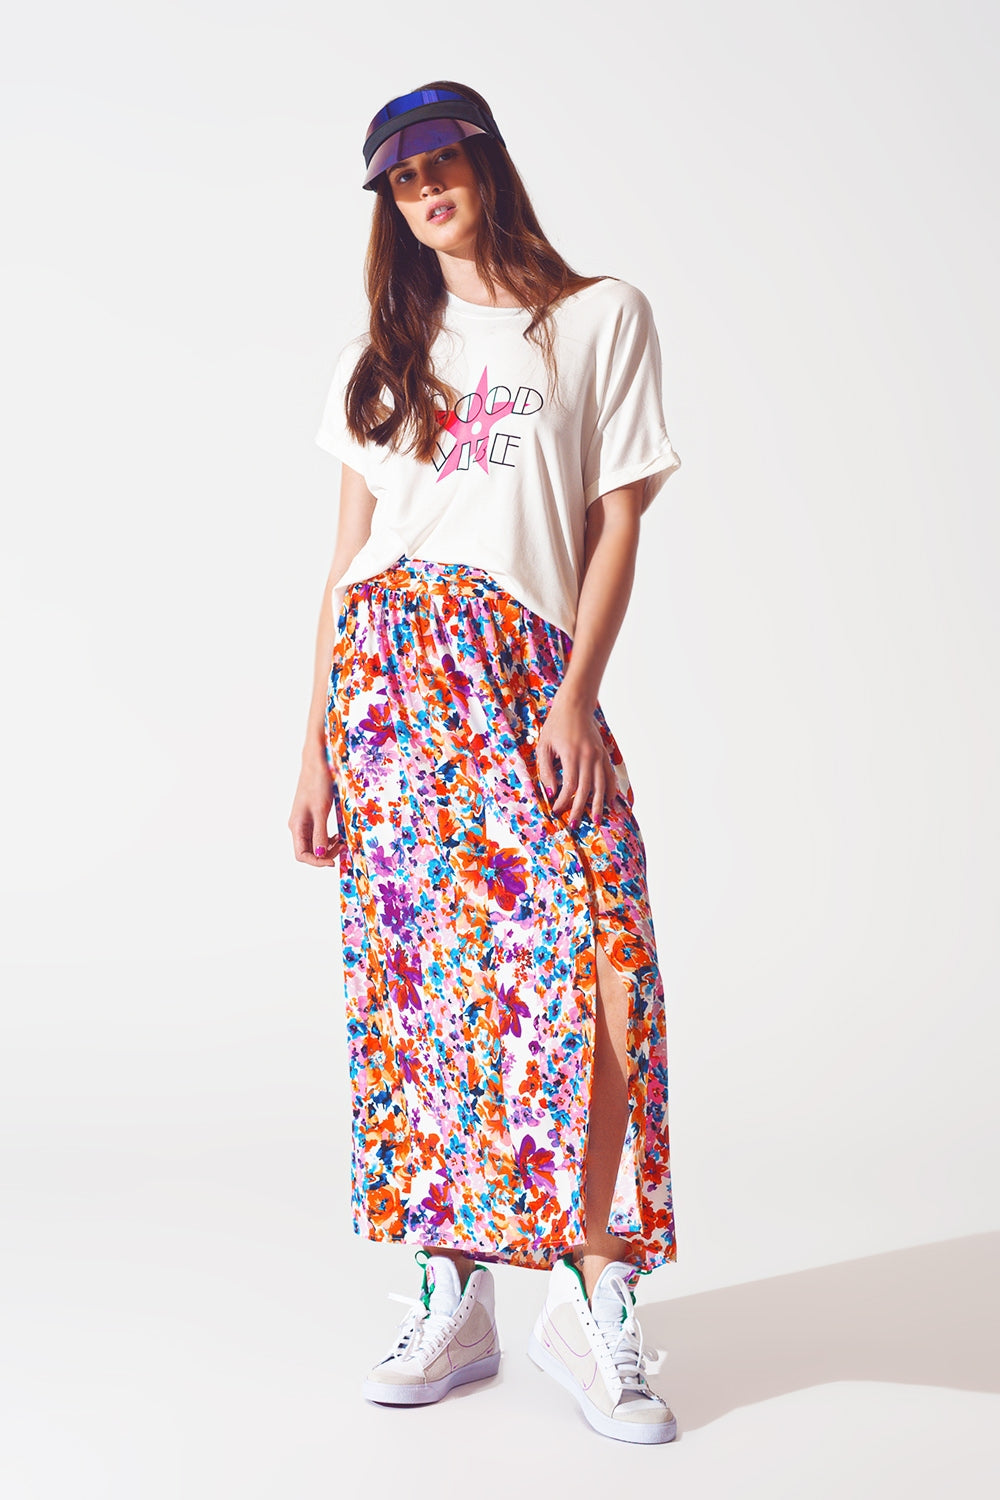 Flower Print Pleated Midi Skirt - Szua Store